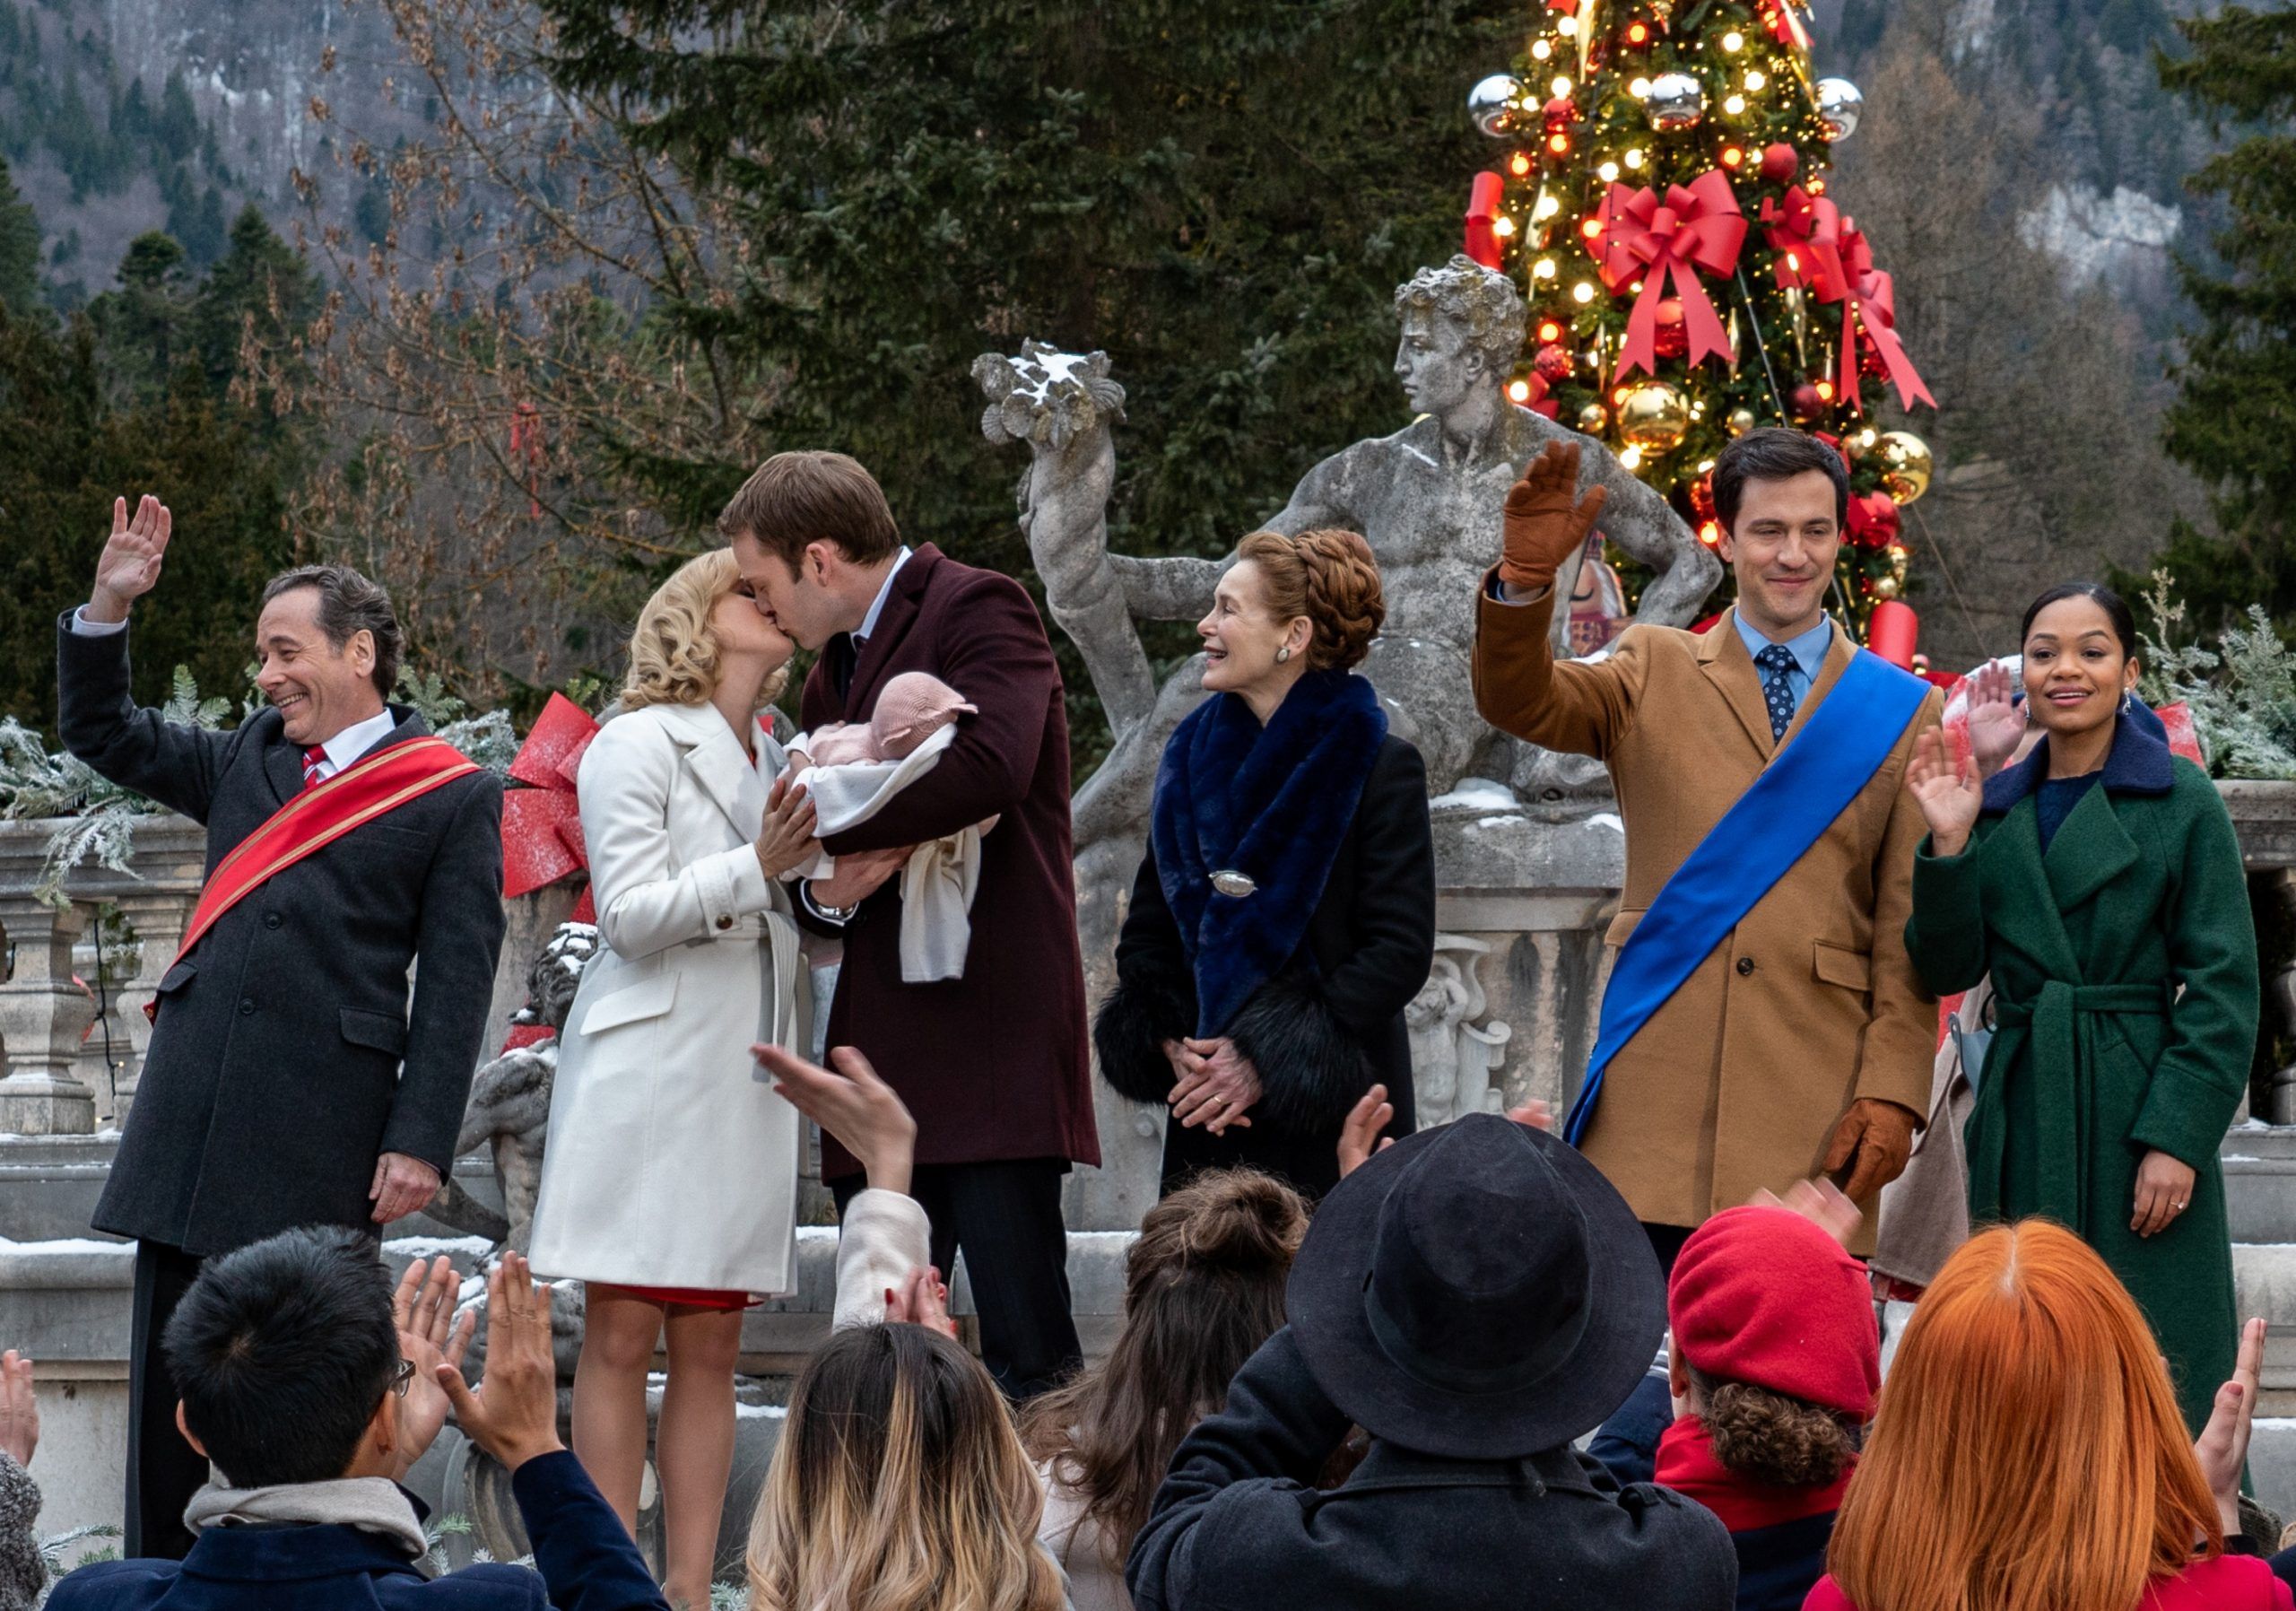 A Christmas Prince 3 Stars Rose McIver & Ben Lamb on the Netflix Franchise | Collider